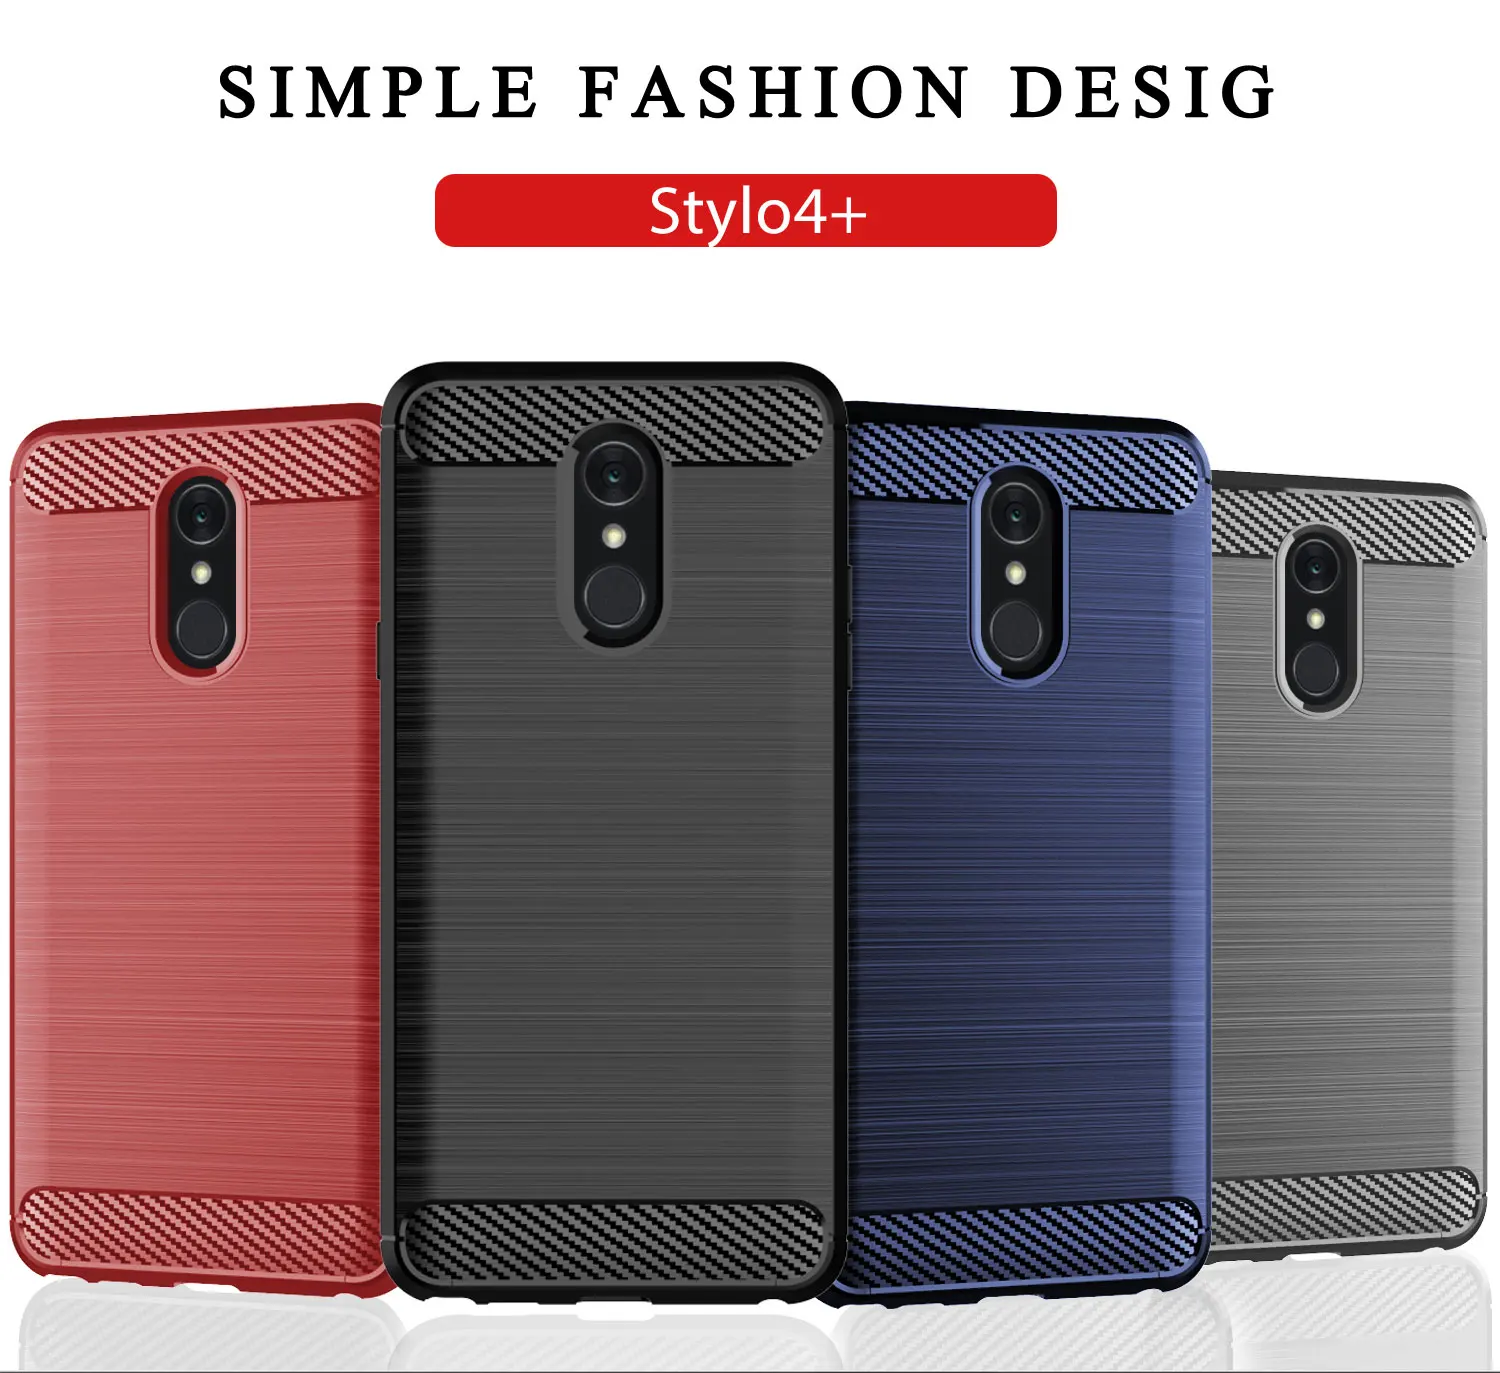 360 Drop Protecte Case For LG Stylo4+ Stylo4 Stylo 4 Plus